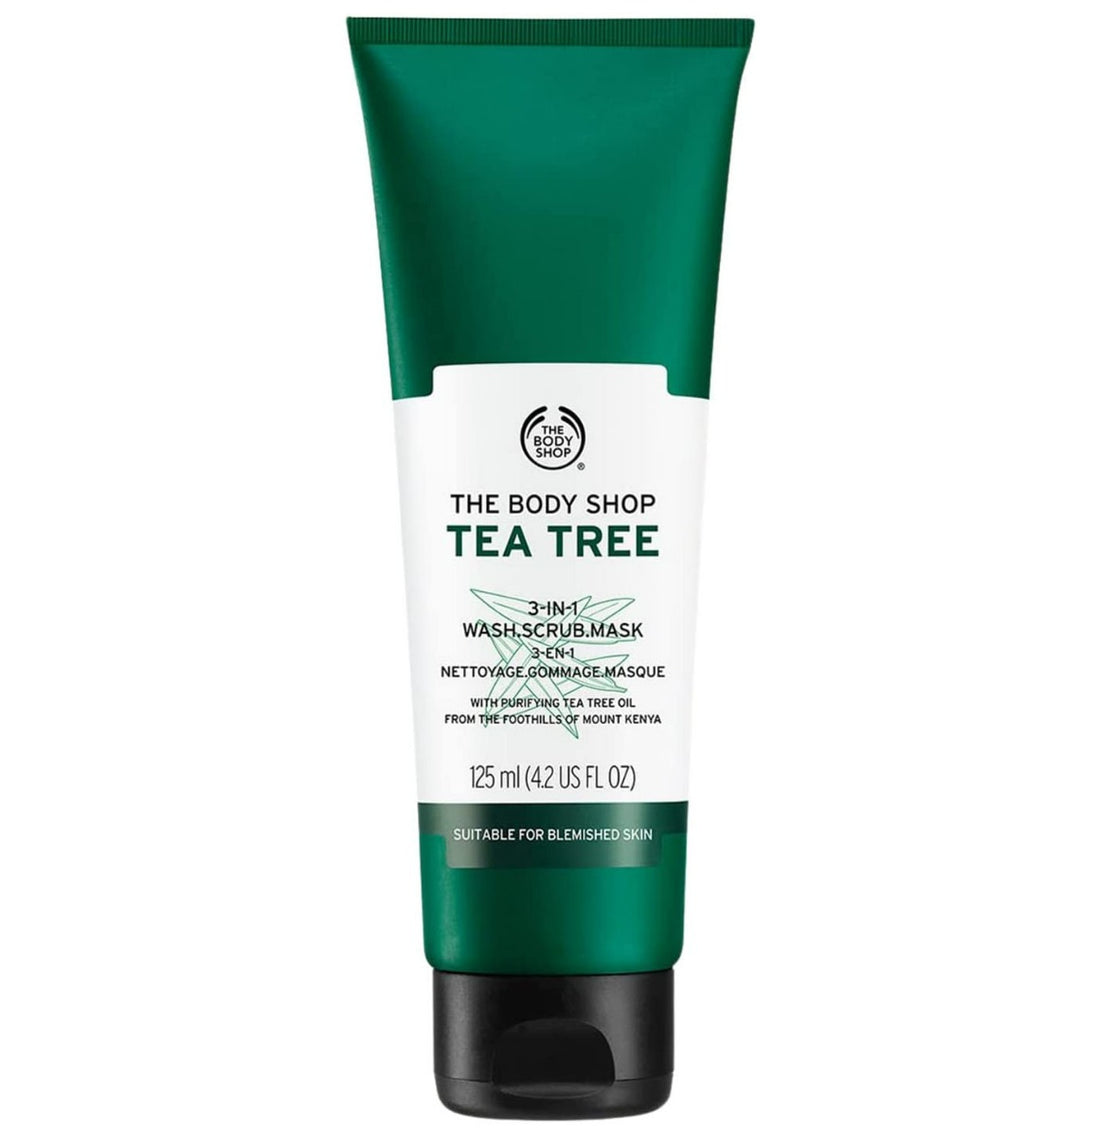 The Body Shop Tea Tree 3-in-1 Wash Scrub Mask (125ml)